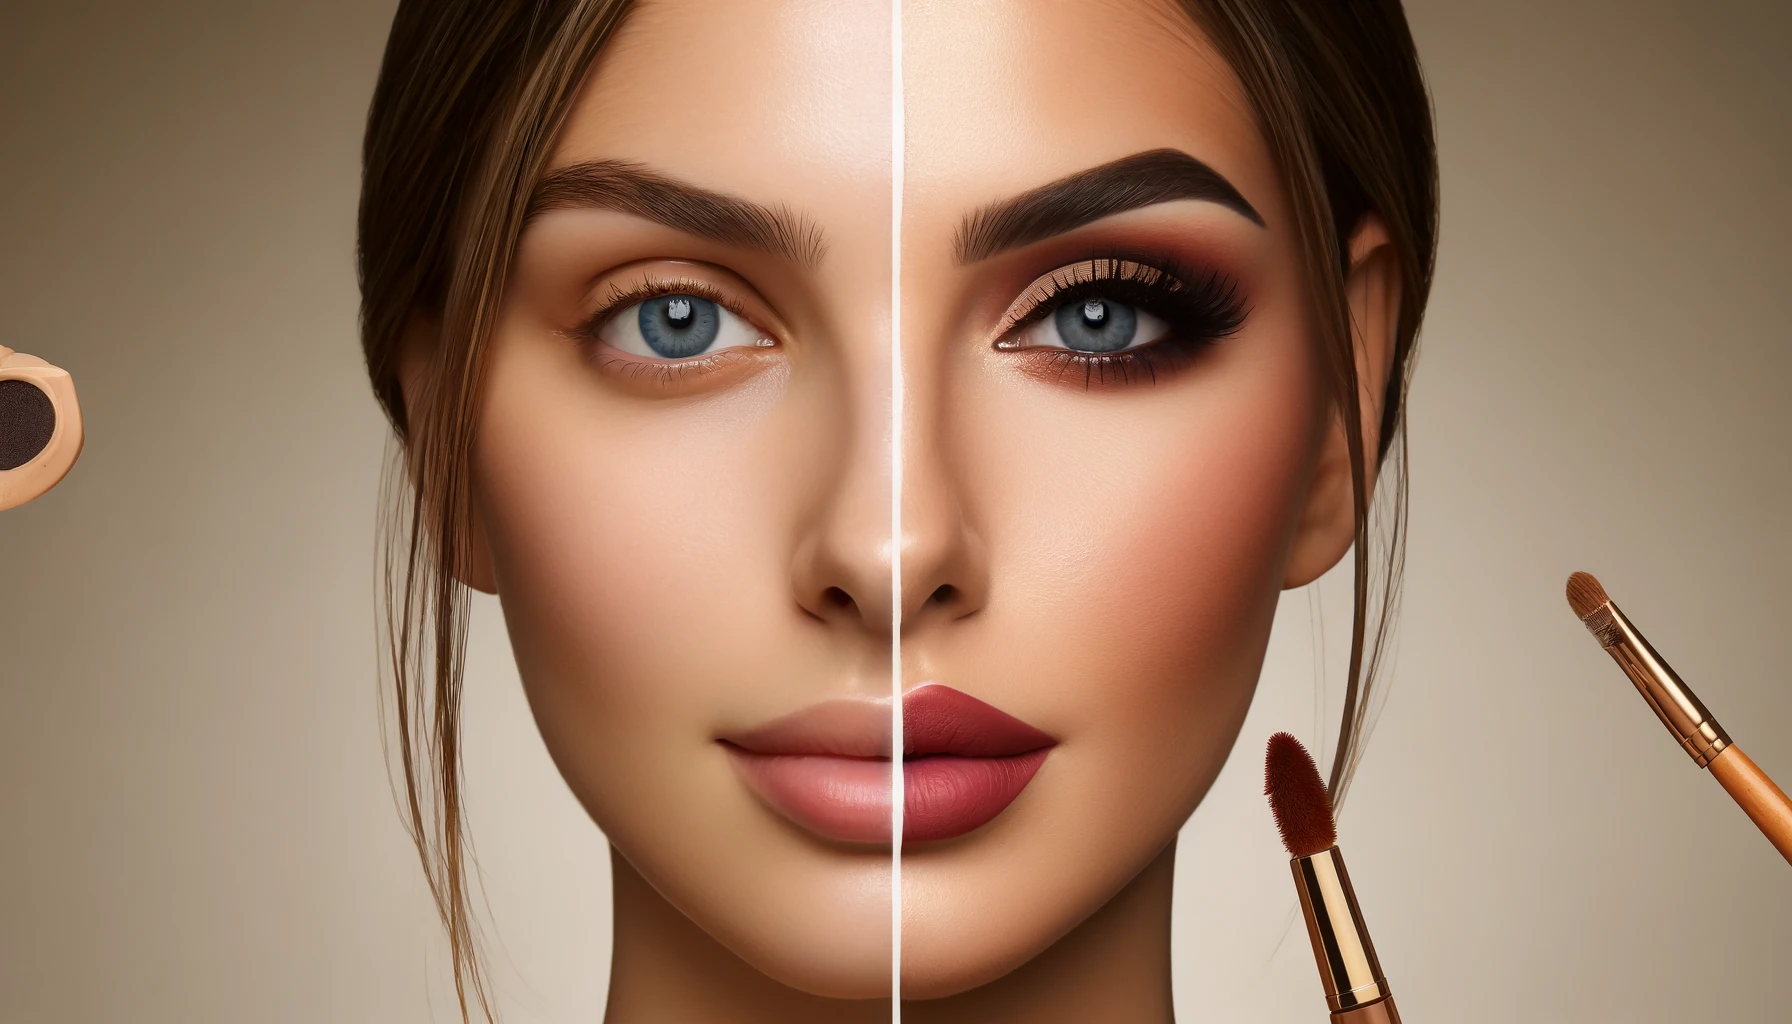 a woman with no makeup vs with premium makeup